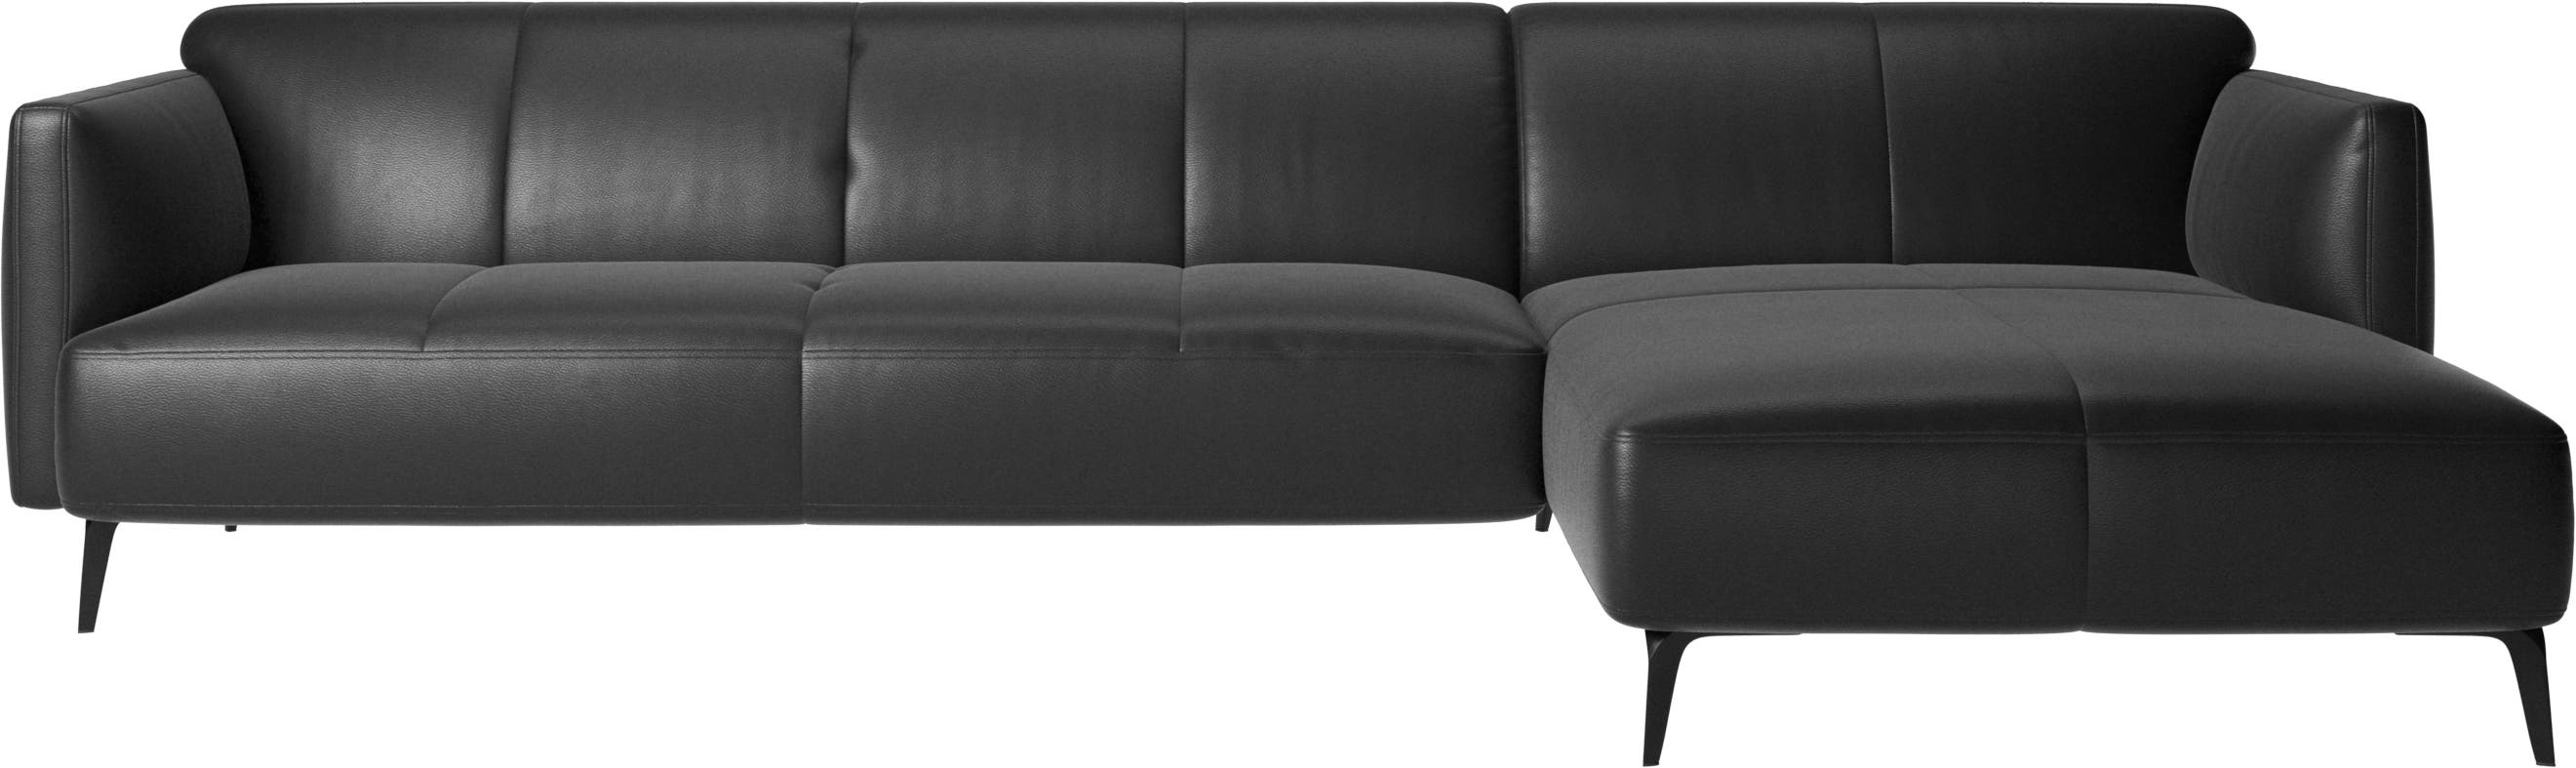 Modena sofa med chaiselong